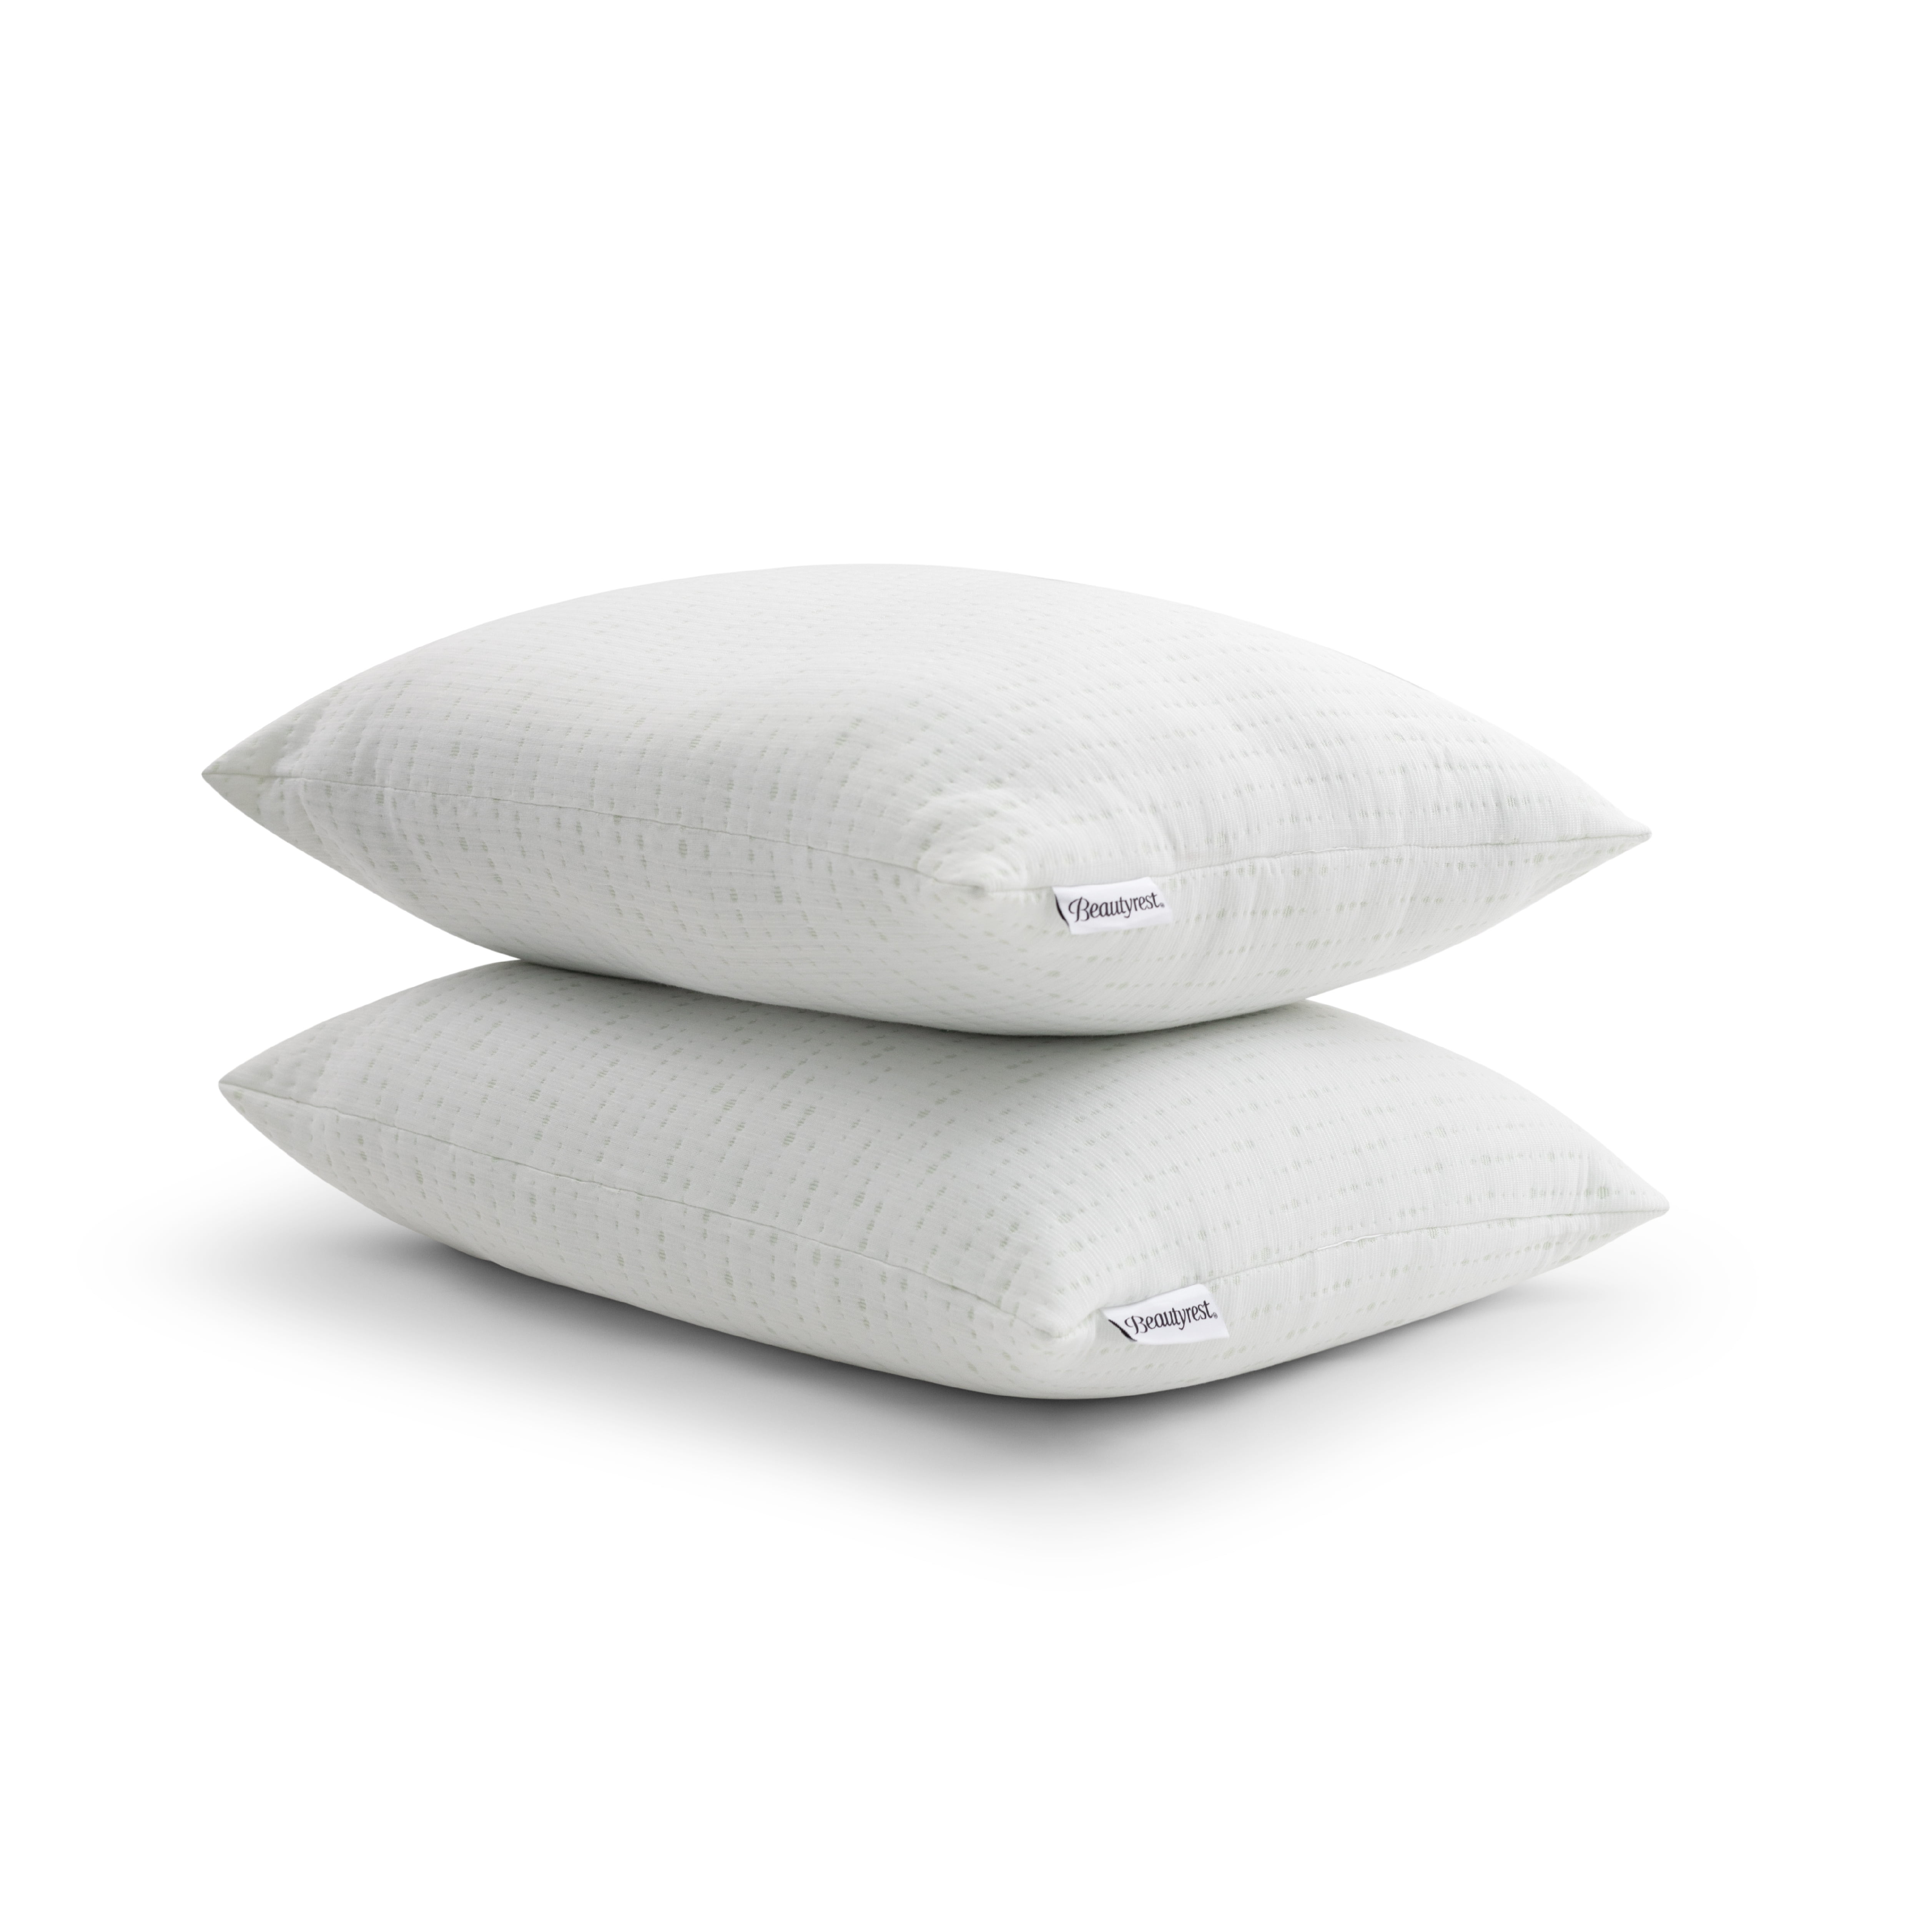 Beautyrest Luxury Power Extra Firm Pillow in Queen Size 